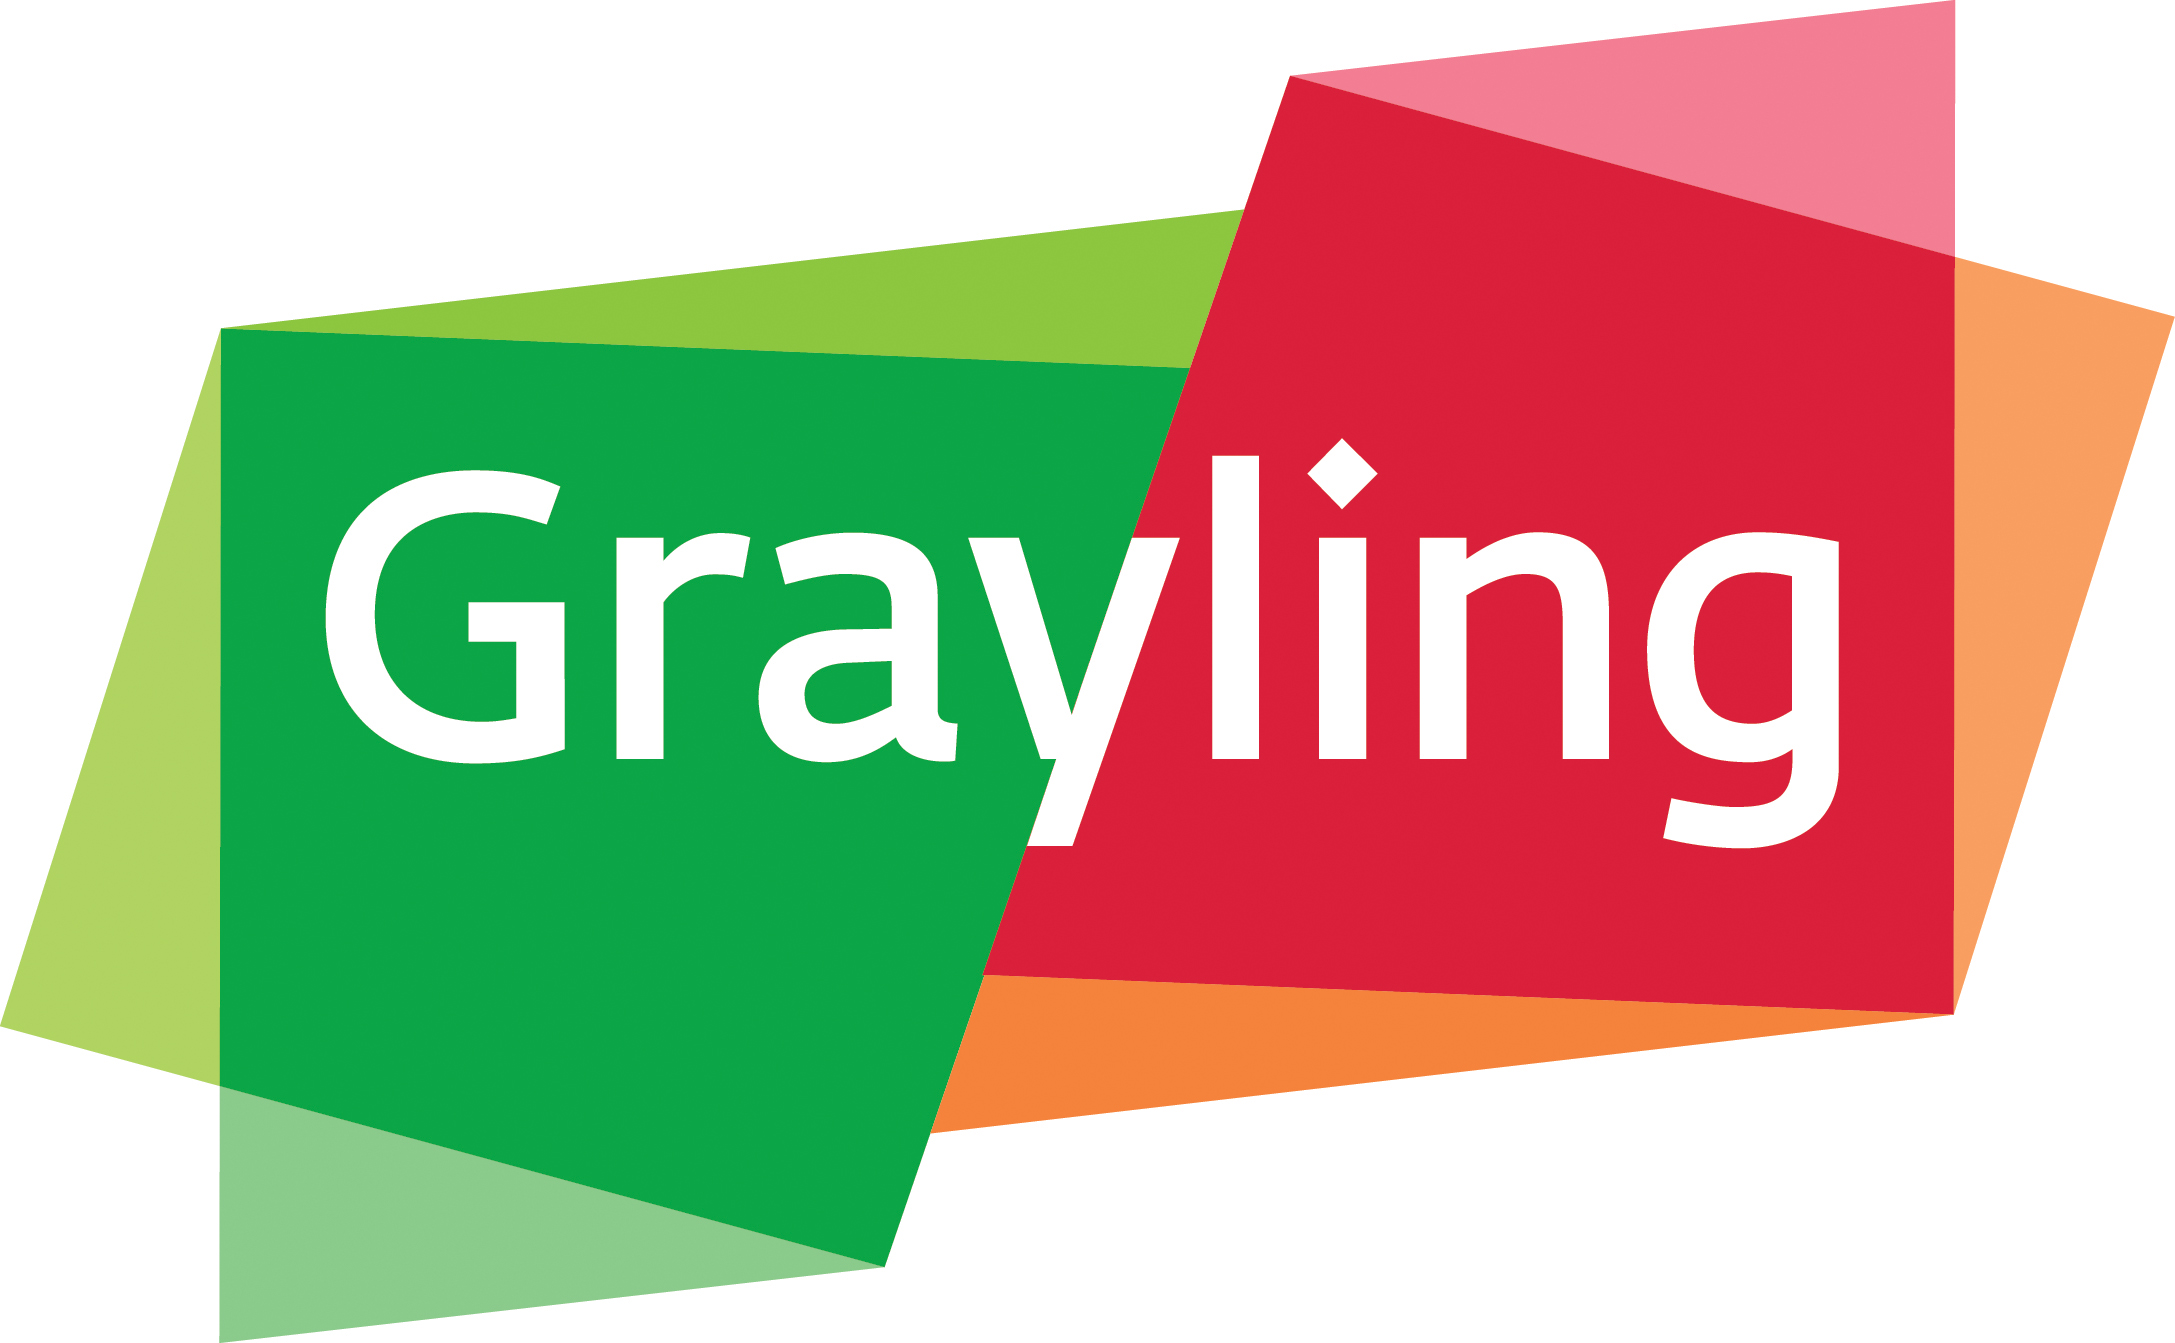  Top PR Firm Logo: Grayling